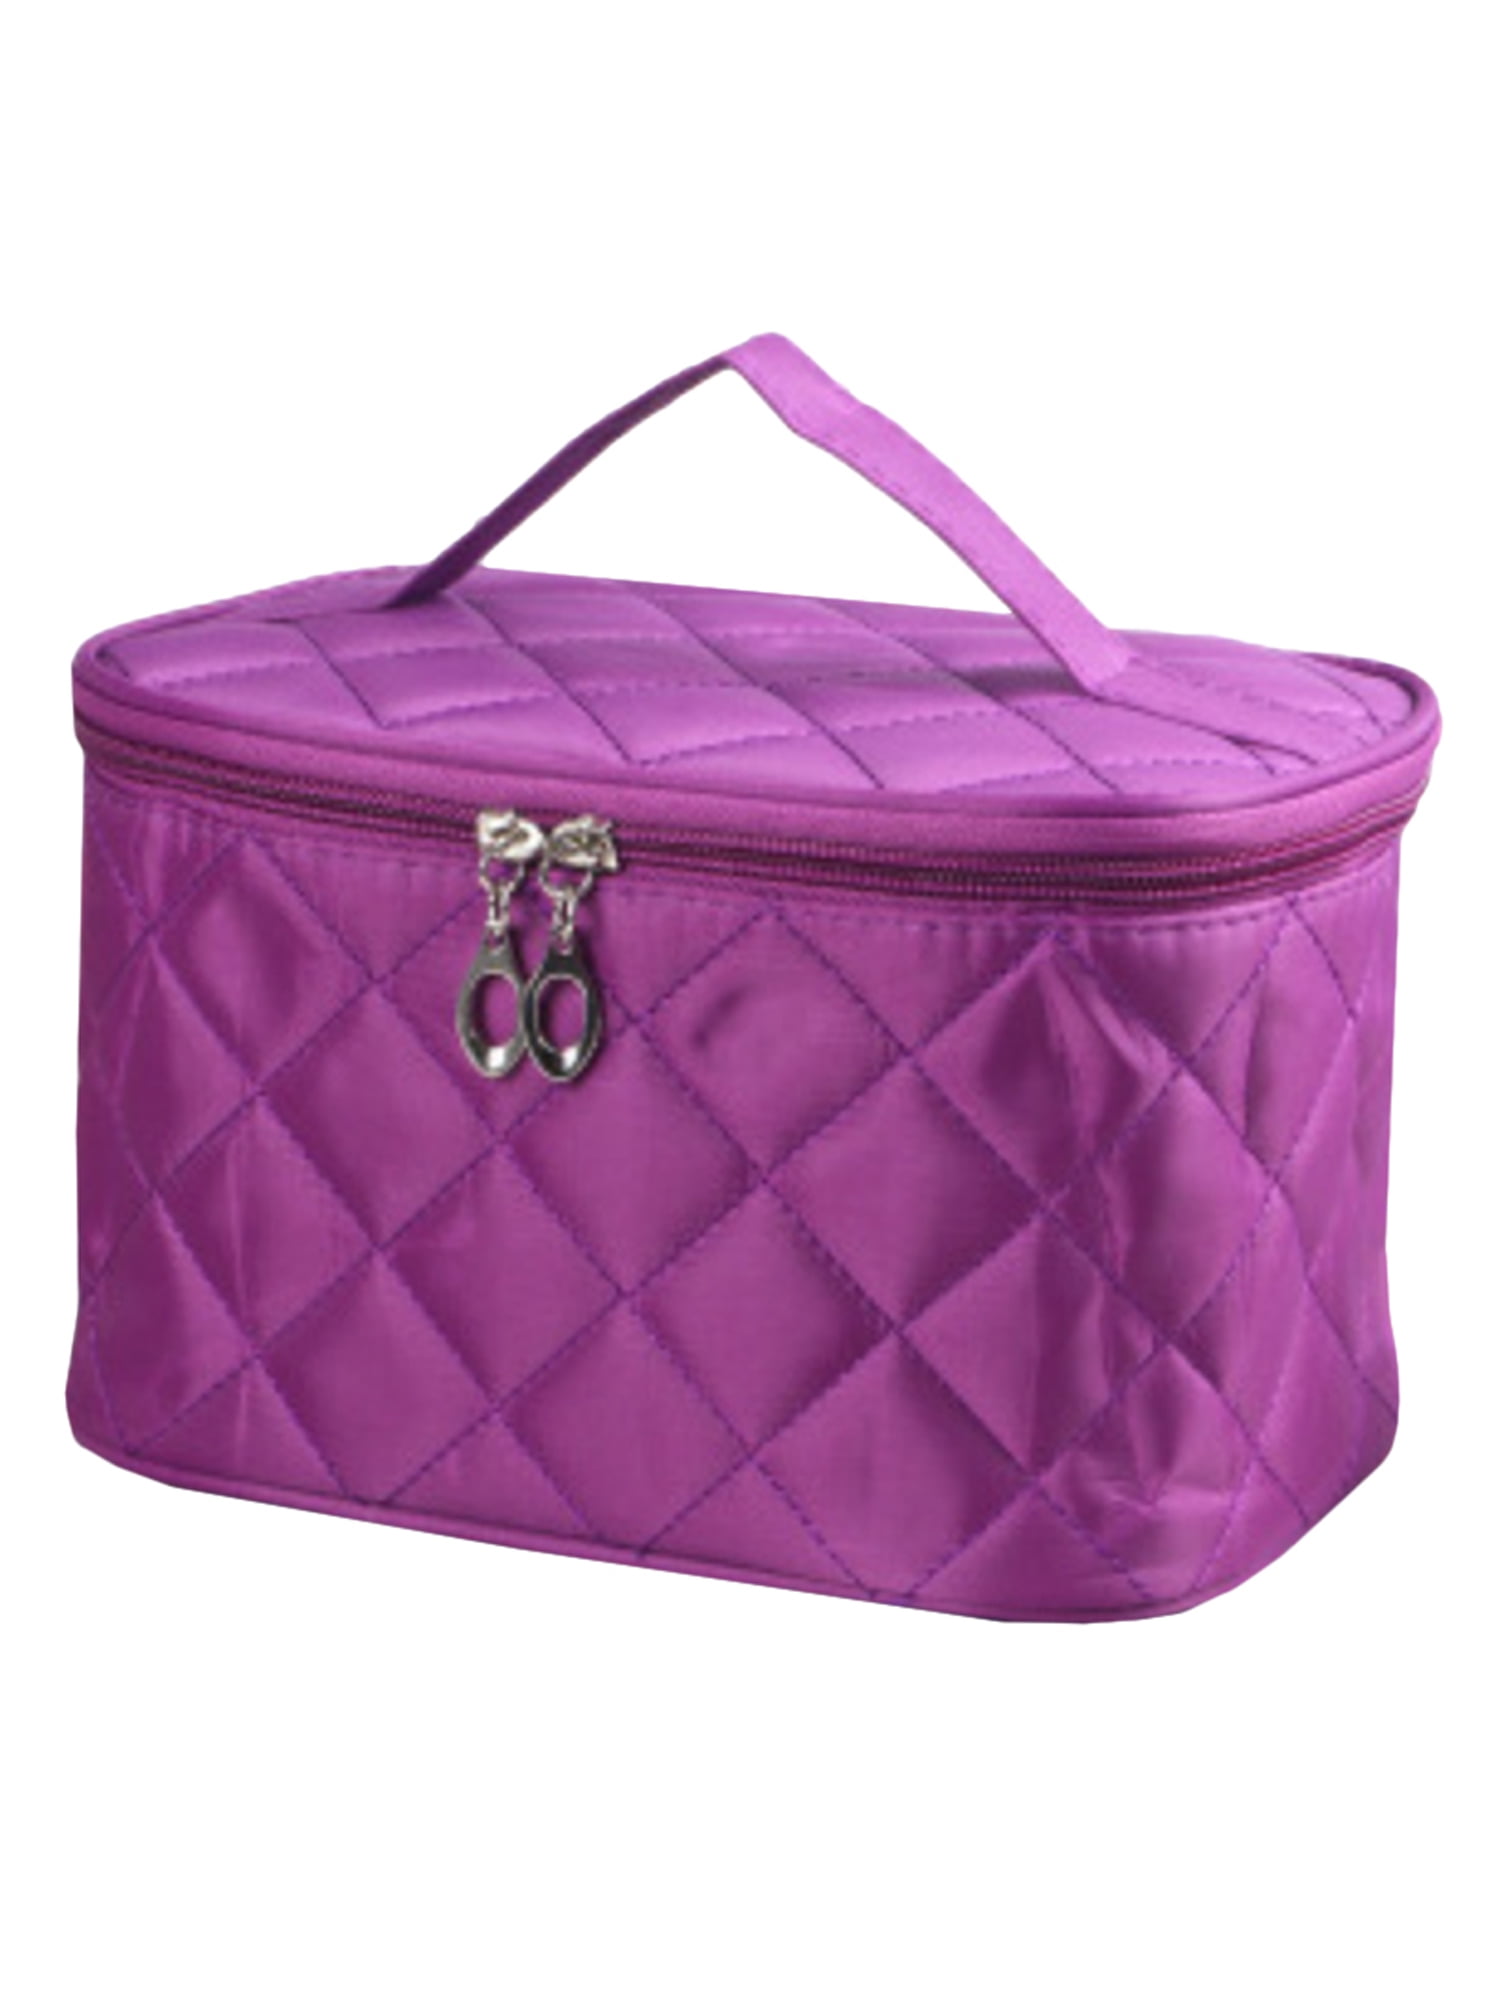 Women's Travel Makeup Plain Portable Cosmetic Handbag Nylon Pouch ...